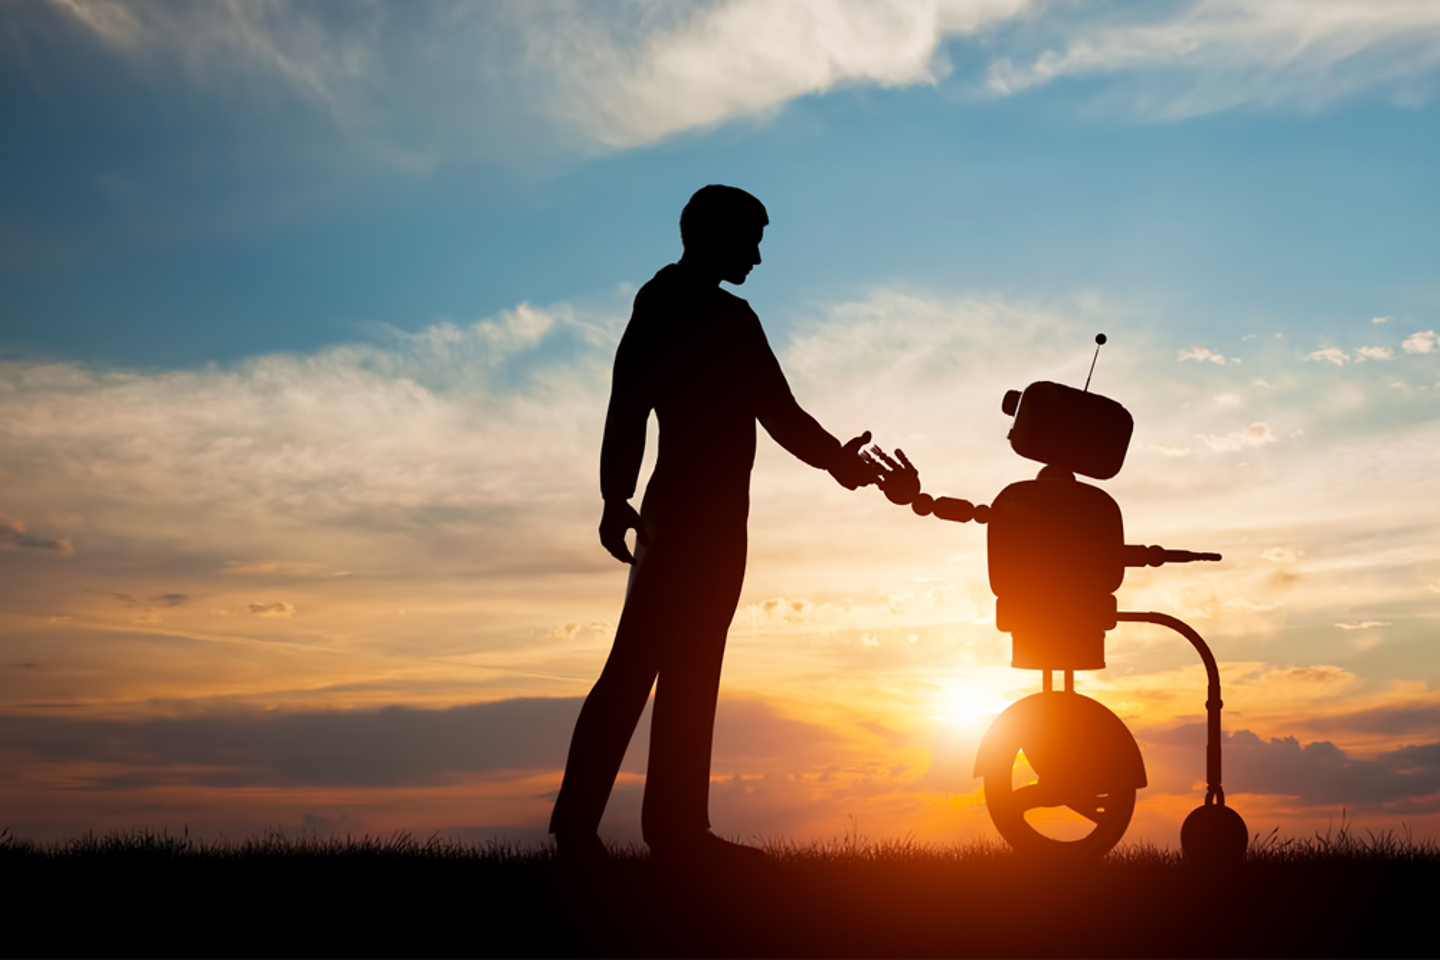 Handshake before sunrise between man and friendly smaller robot